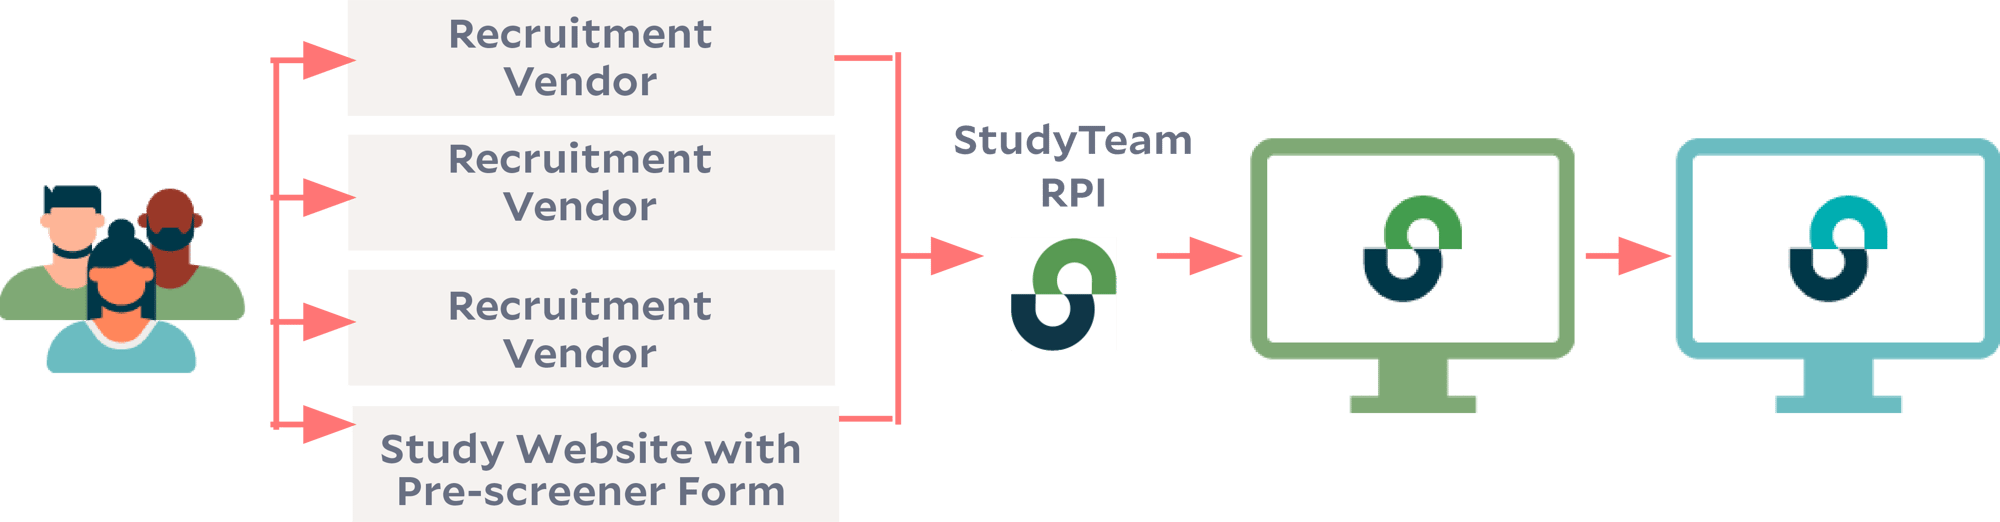 RPI-workflow